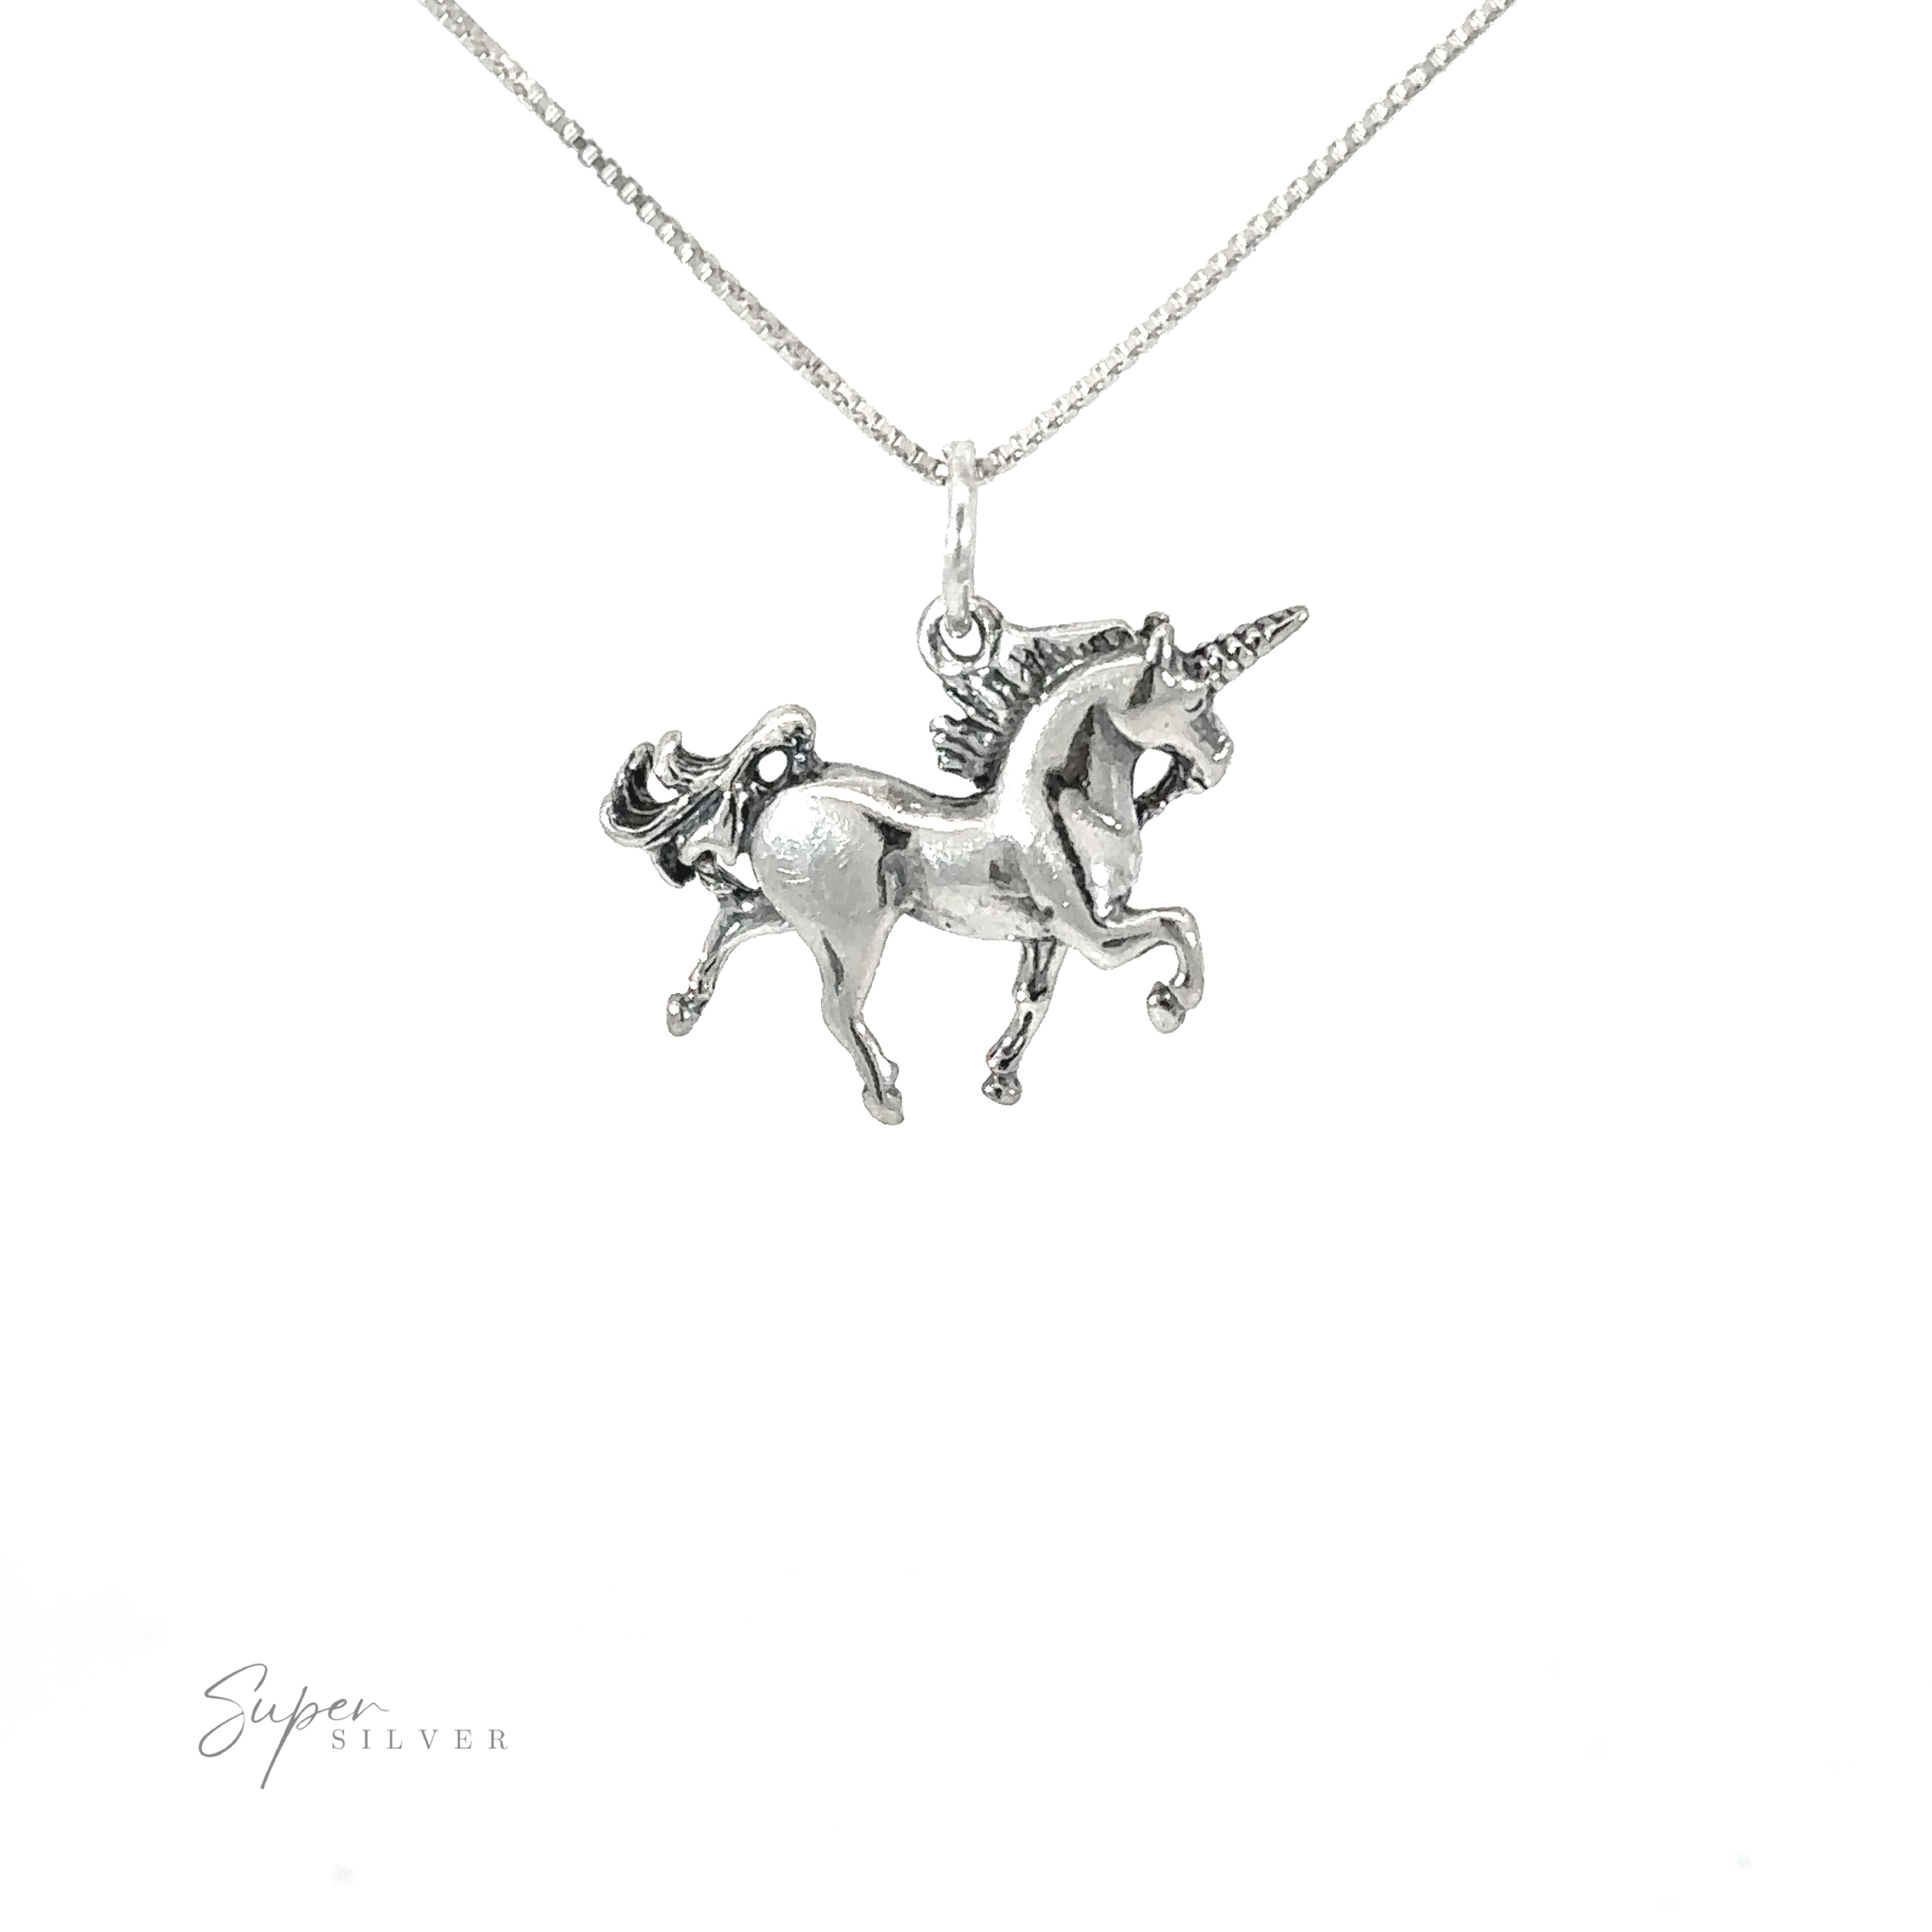 Unicorn Love Toddler/Kids/Girls Necklace - Sterling Silver